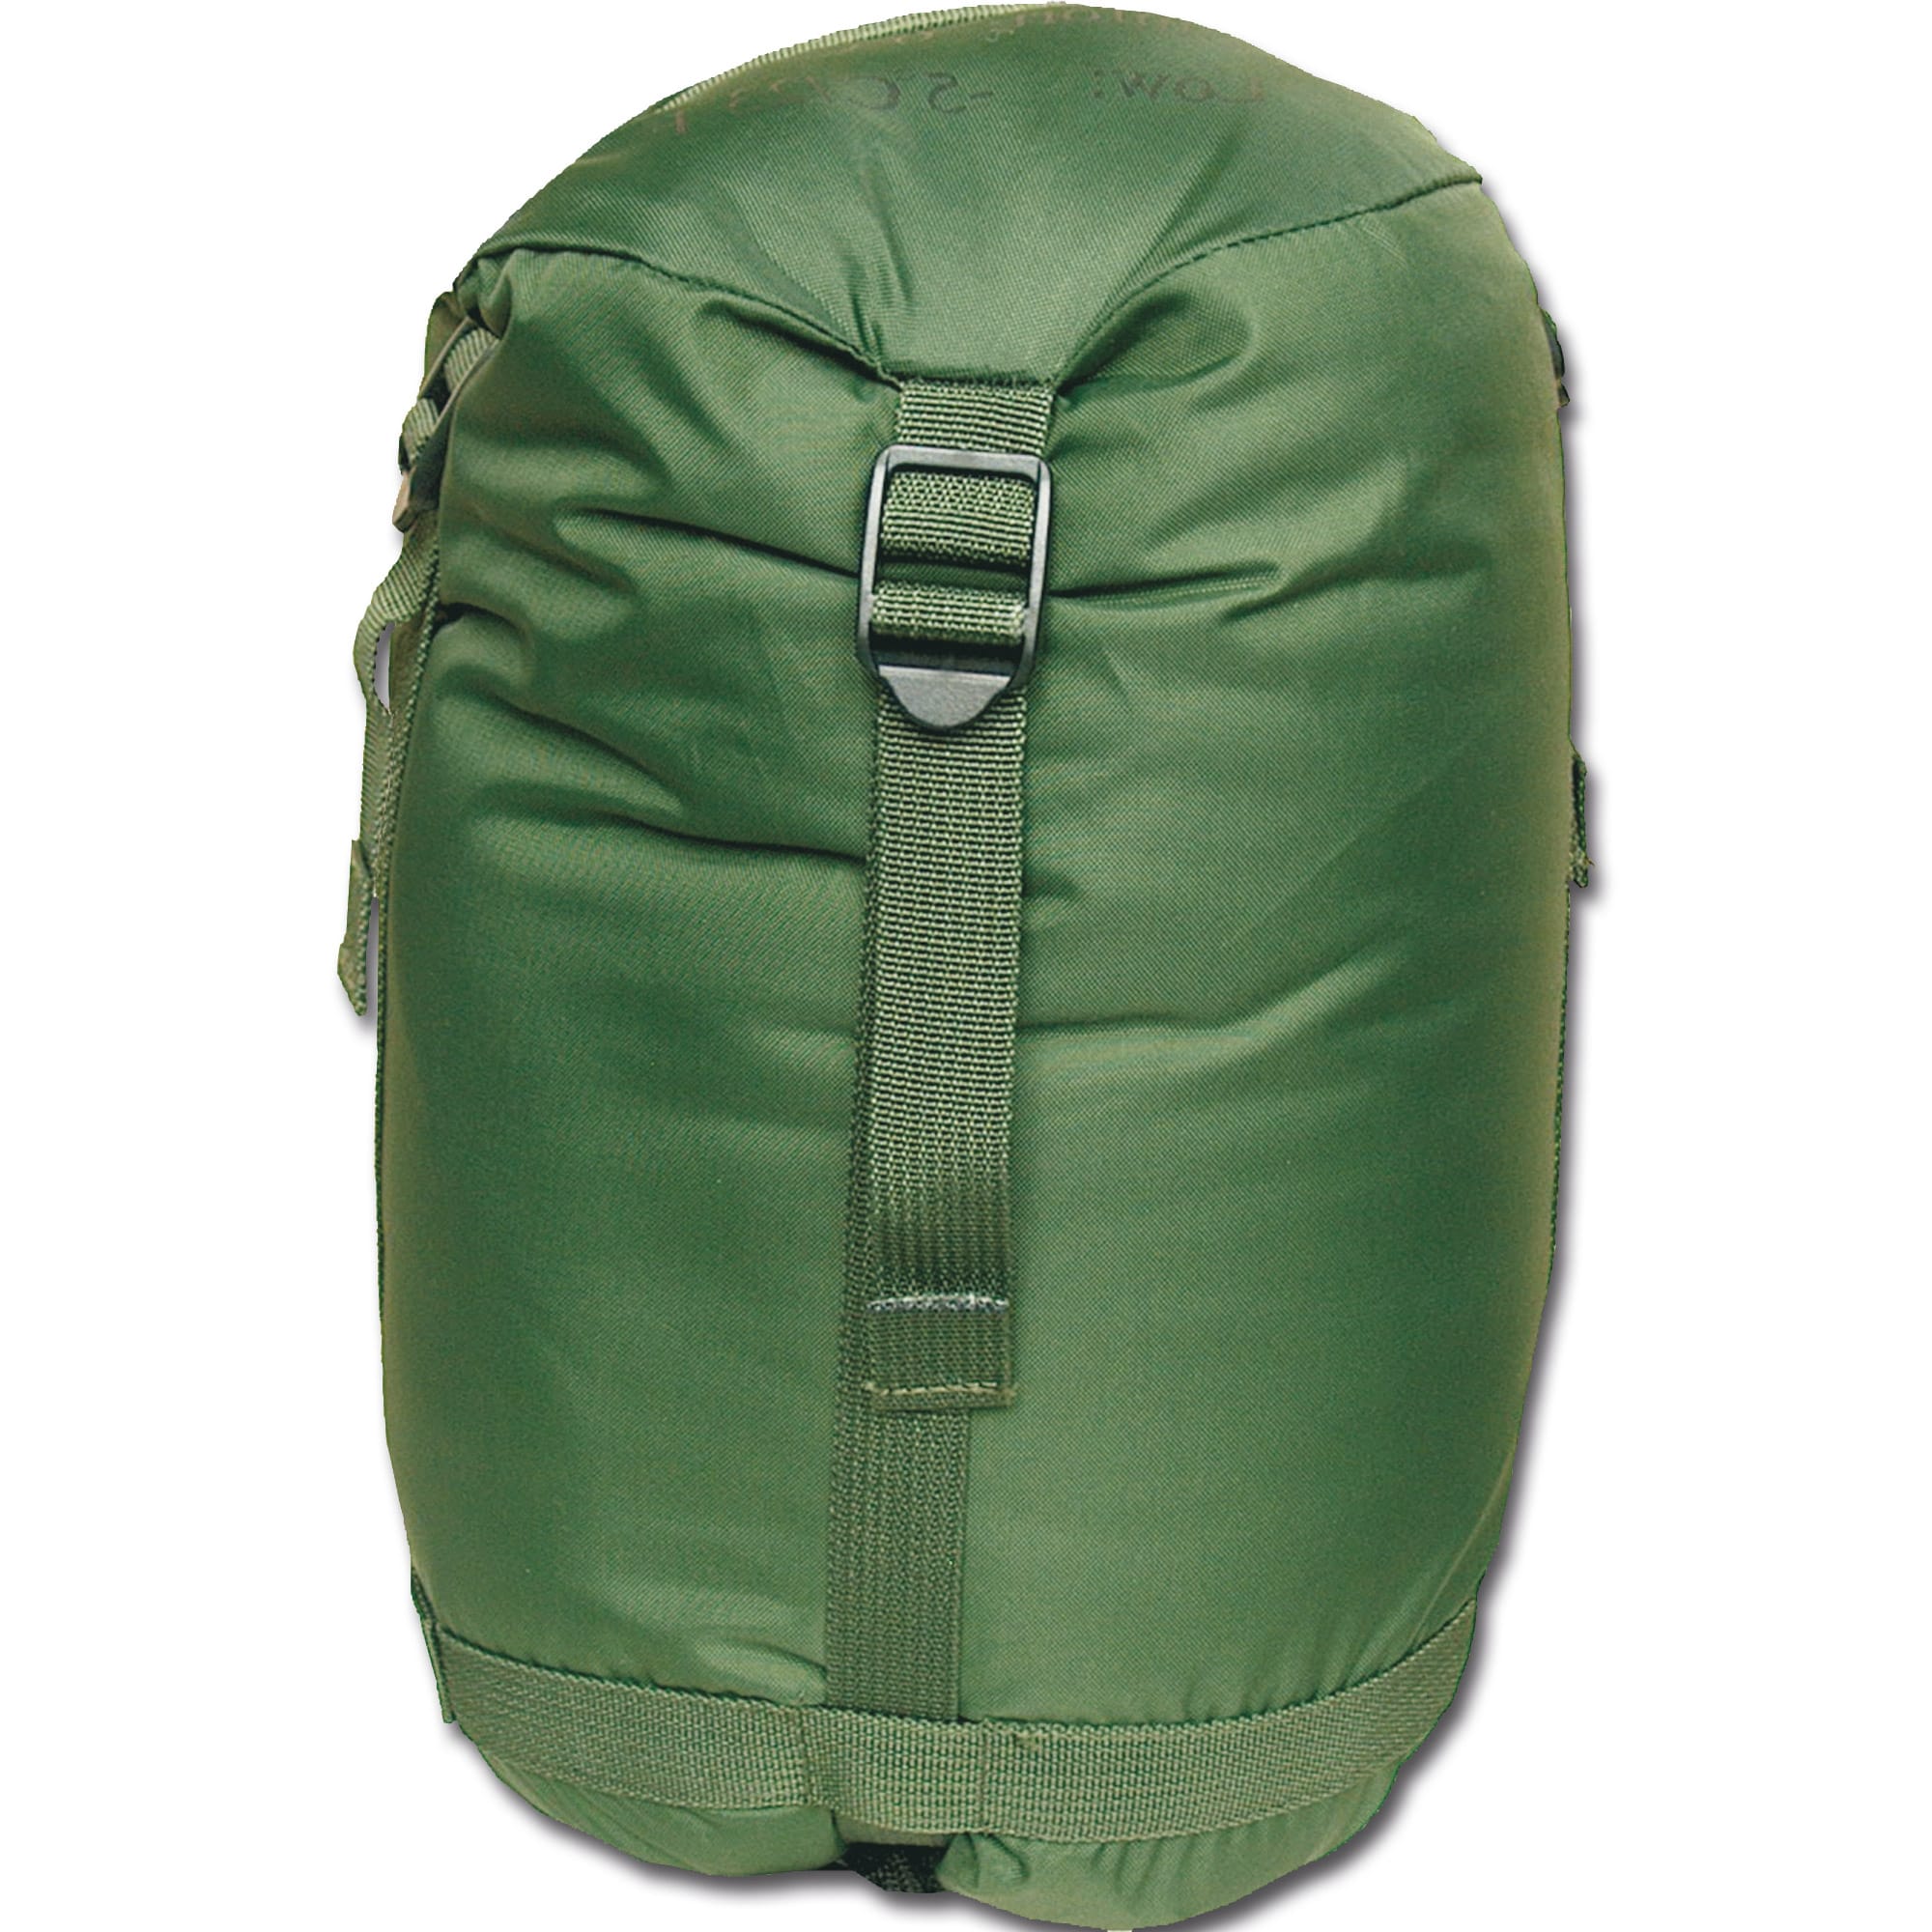 Purchase the Snugpak Sleeping Bag Softie 9 Hawk olive by ASMC